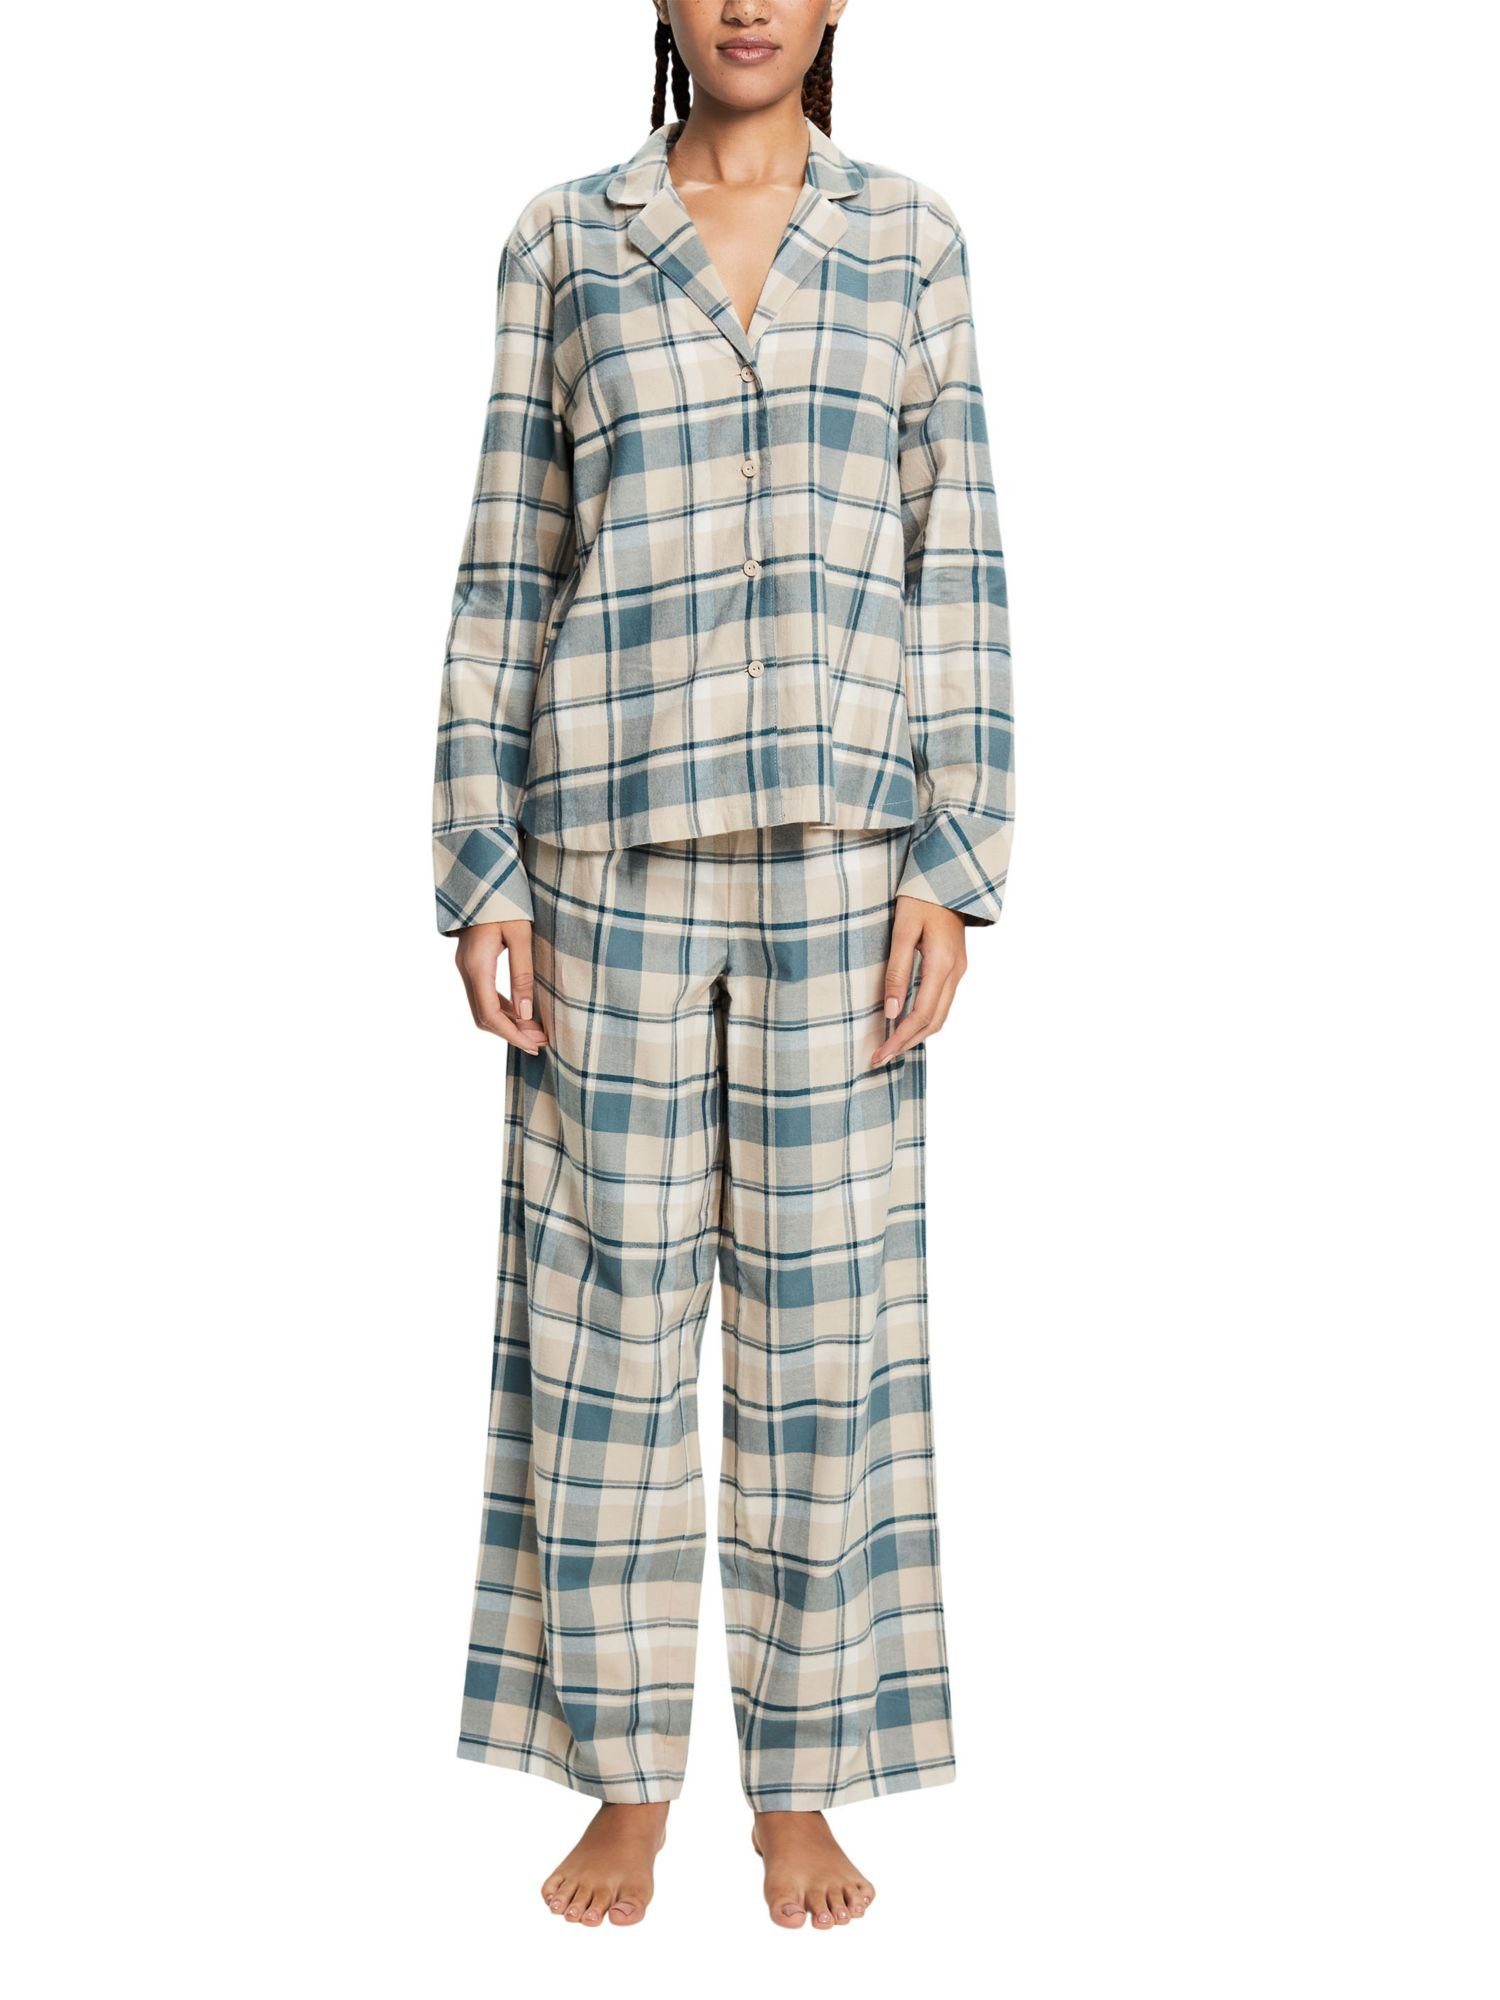 Flanell NEW aus Esprit kariertem BLUE Pyjama TEAL Pyjama-Set